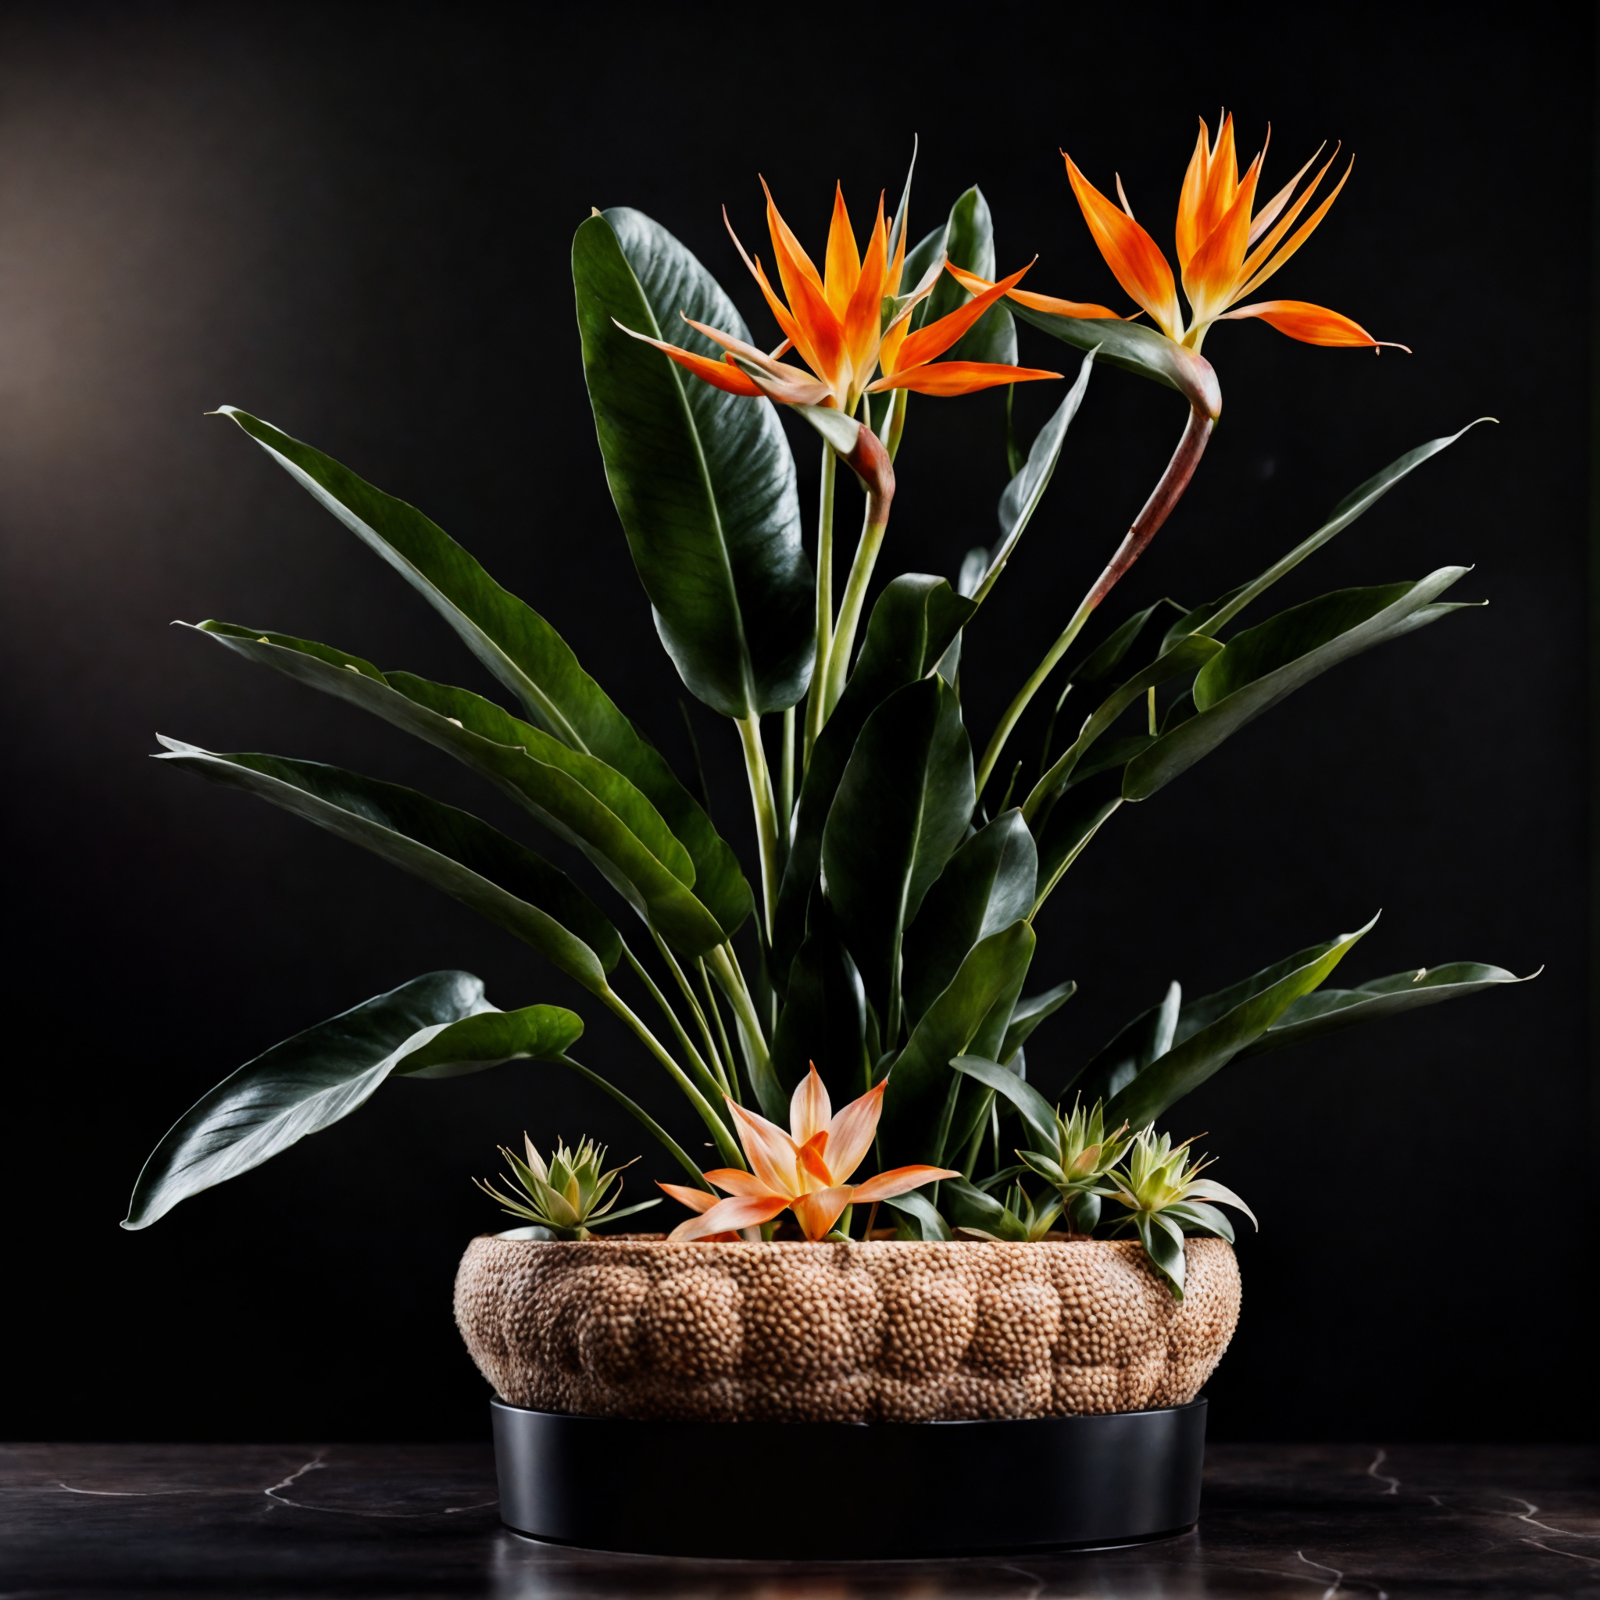 Strelitzia reginae, or Bird of Paradise, with vibrant orange flowers in a metal bowl, clear indoor lighting.